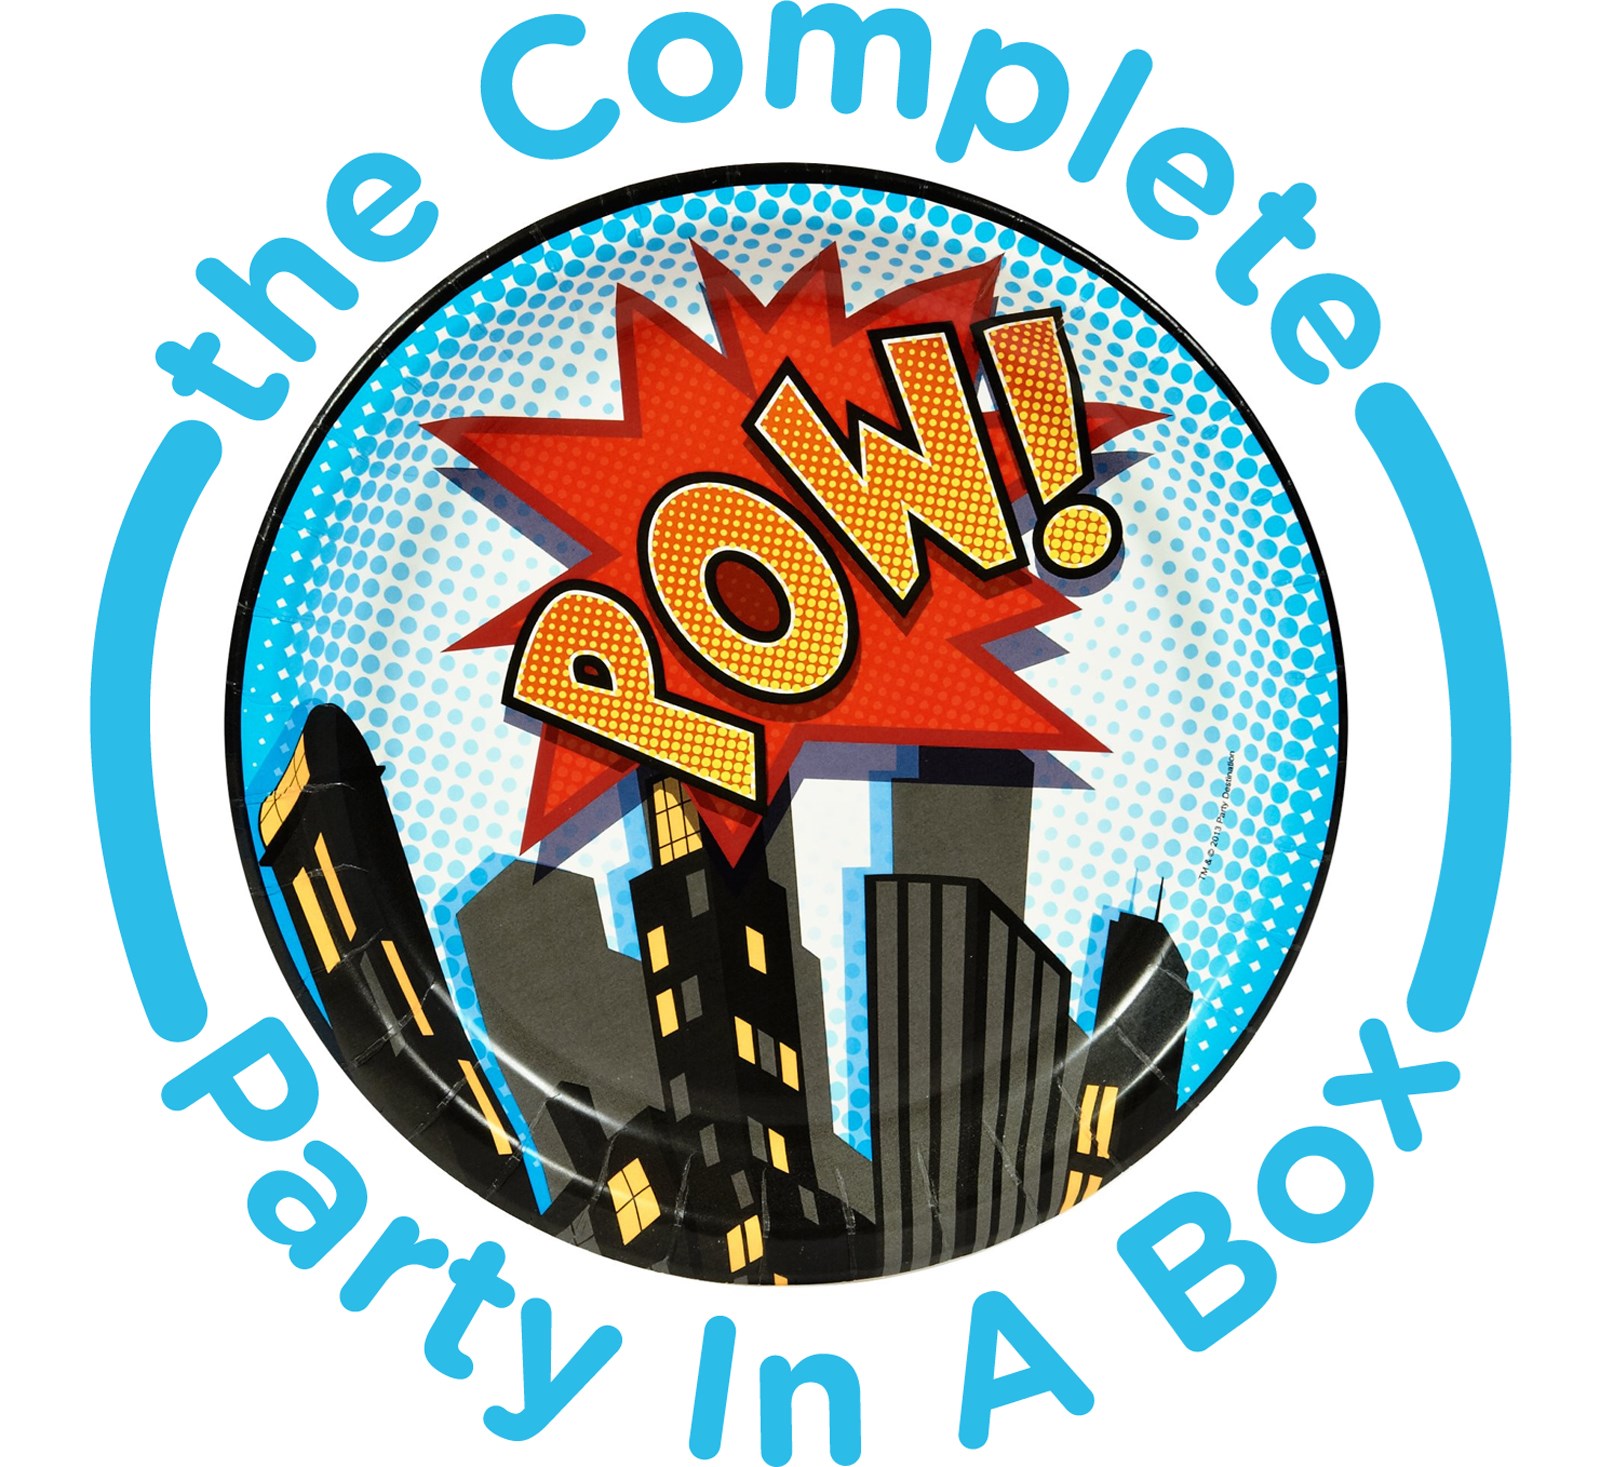 Superhero Party Supplies in a Box